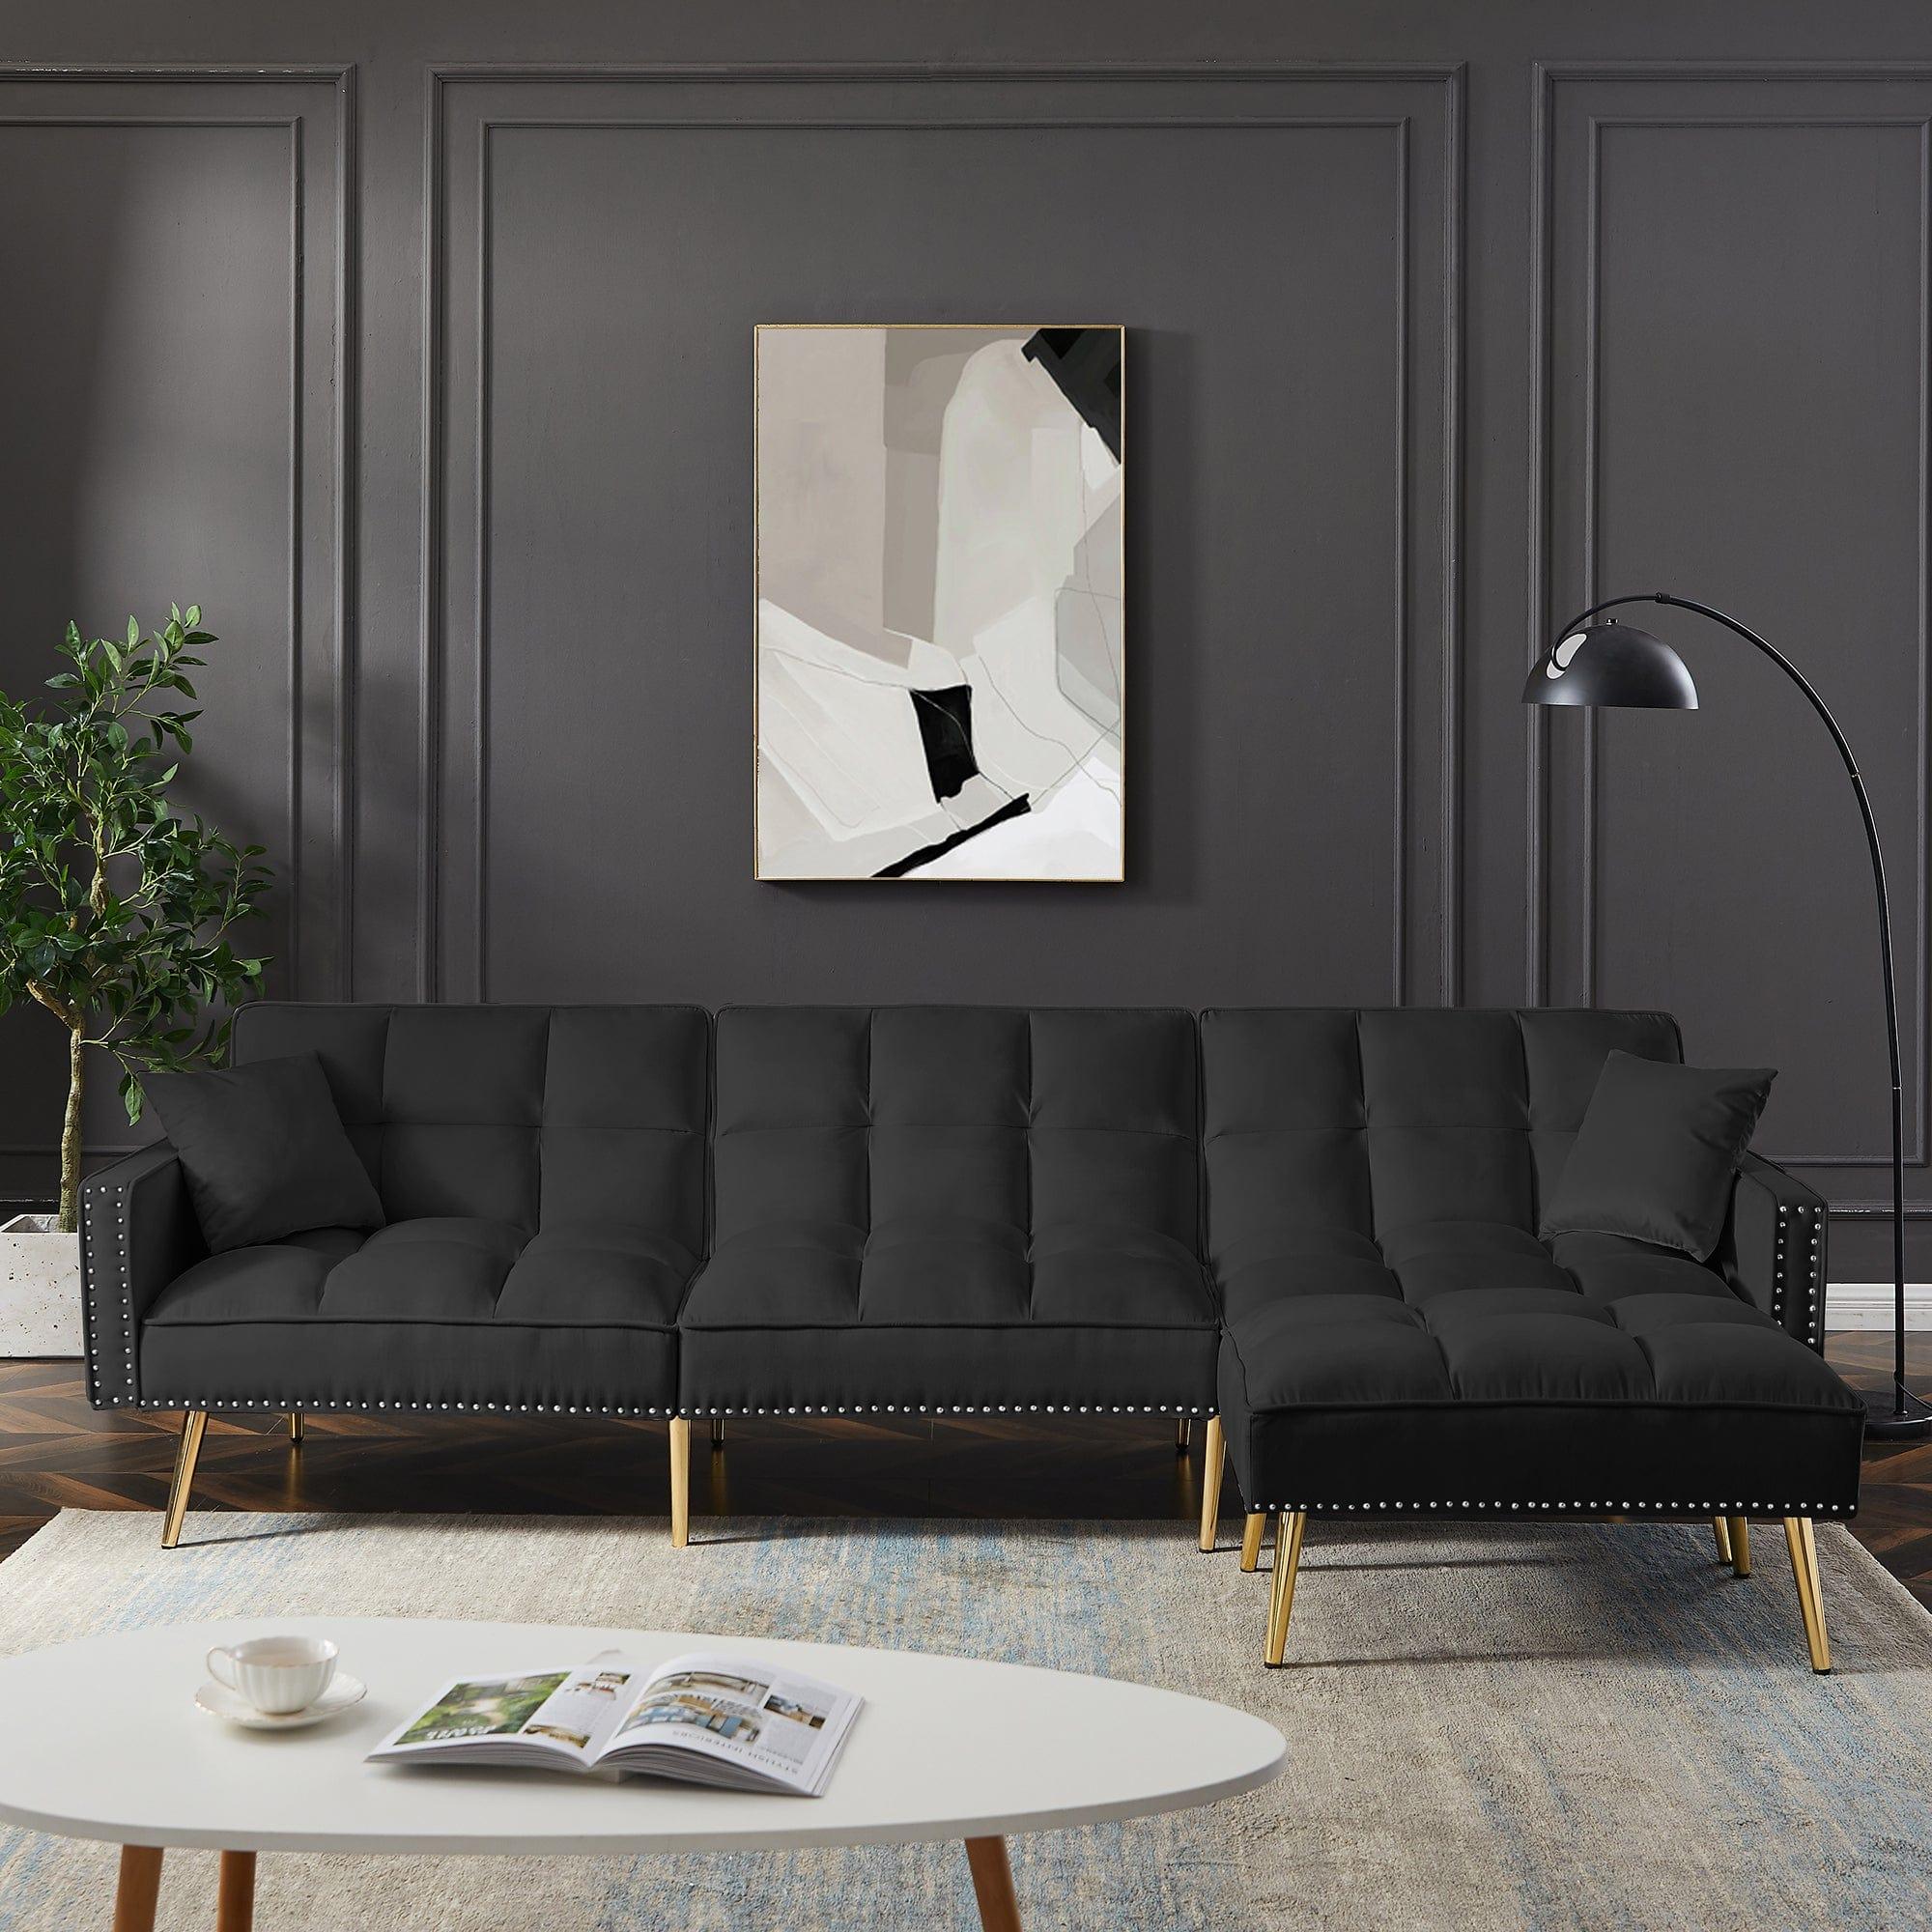 Noire Sofa | Shop Modern, Minimalist Home Decor | Mademoiselle Home ...